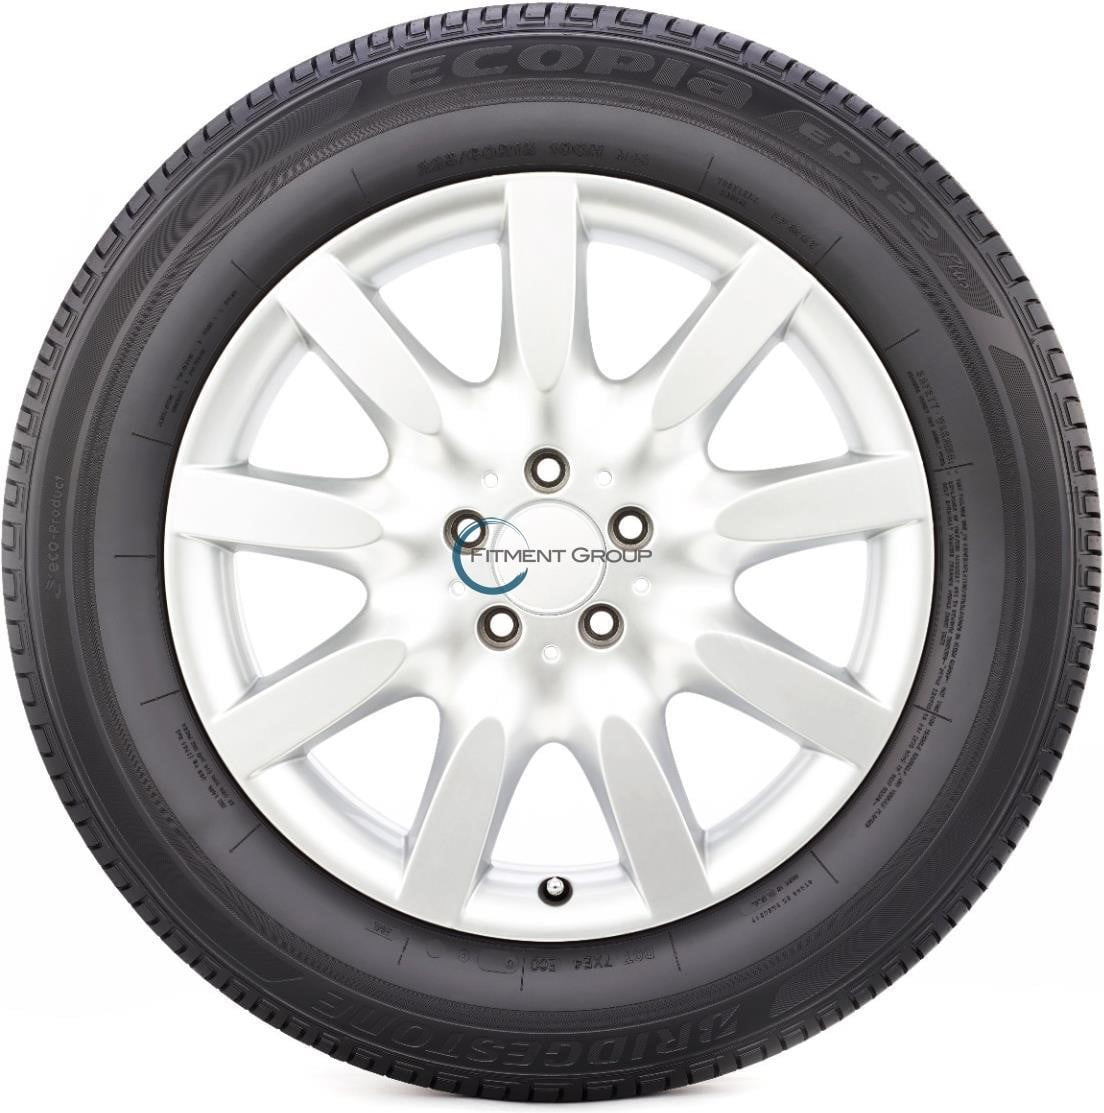 Bridgestone blizzak dm-v2 P225/65R17 102S bsw winter tire 